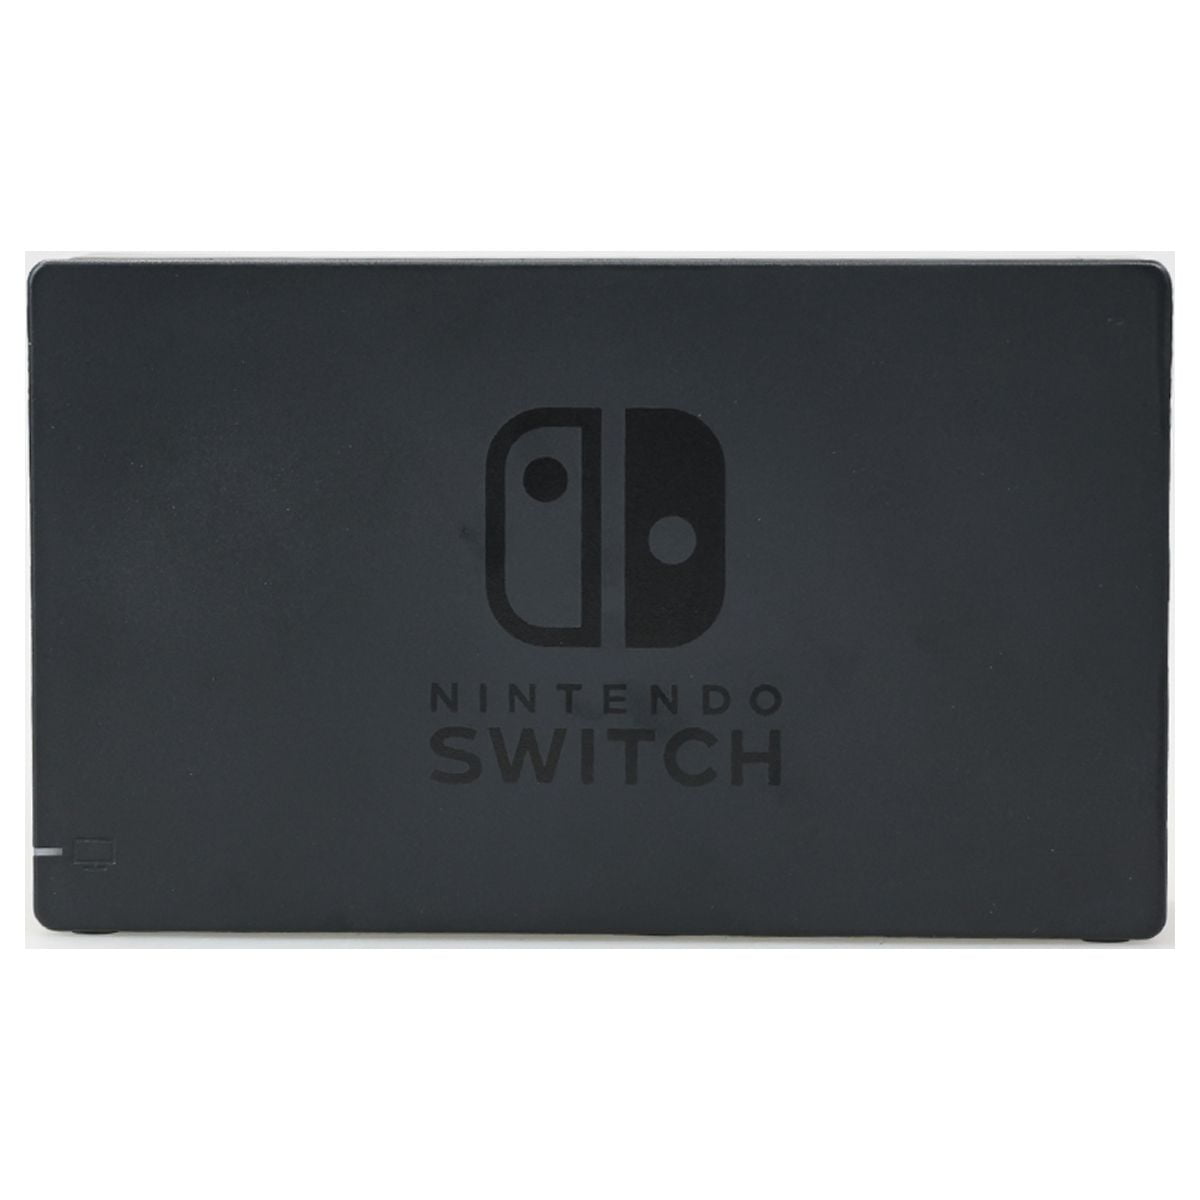 Saistore Nintendo Switch Dock Black